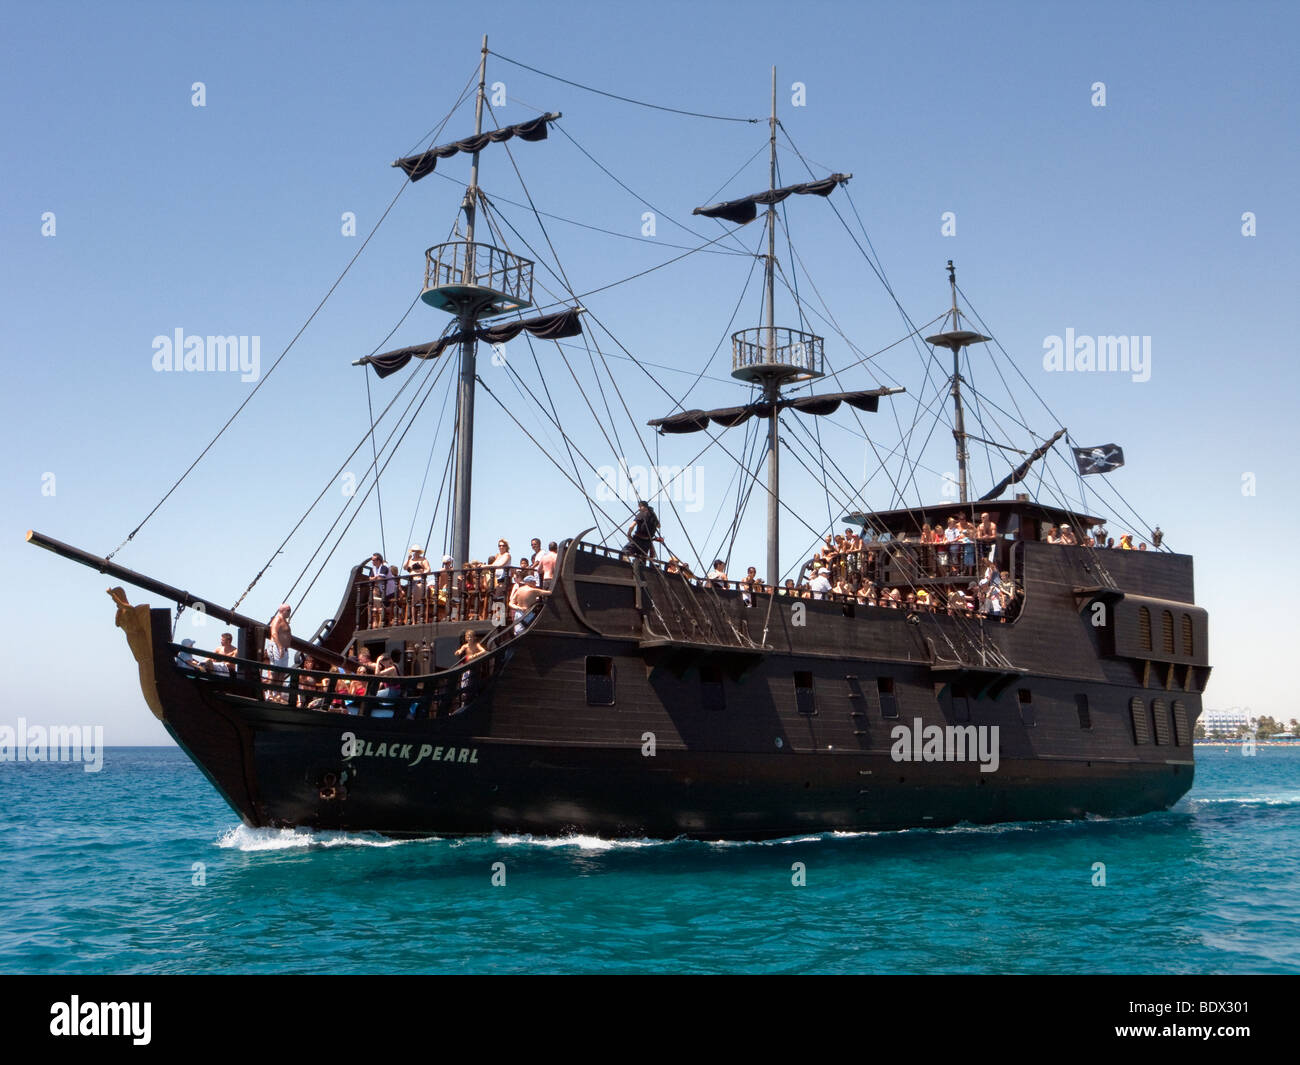 Black pearl ship -Fotos und -Bildmaterial in hoher Auflösung – Alamy